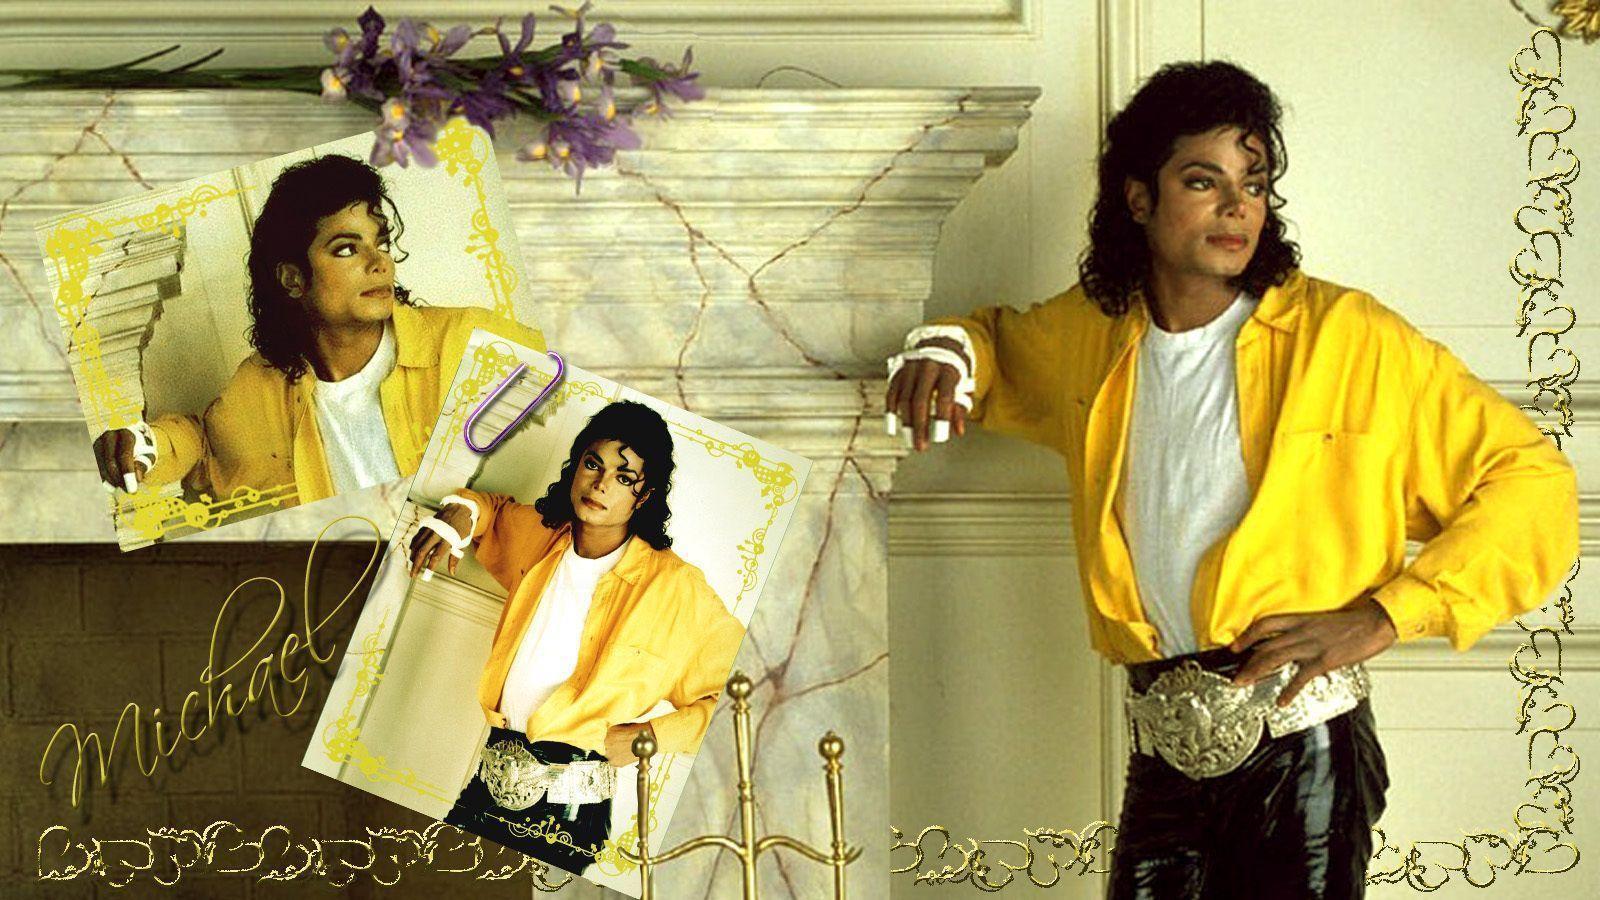 image For > Michael Jackson Wallpaper For Computer